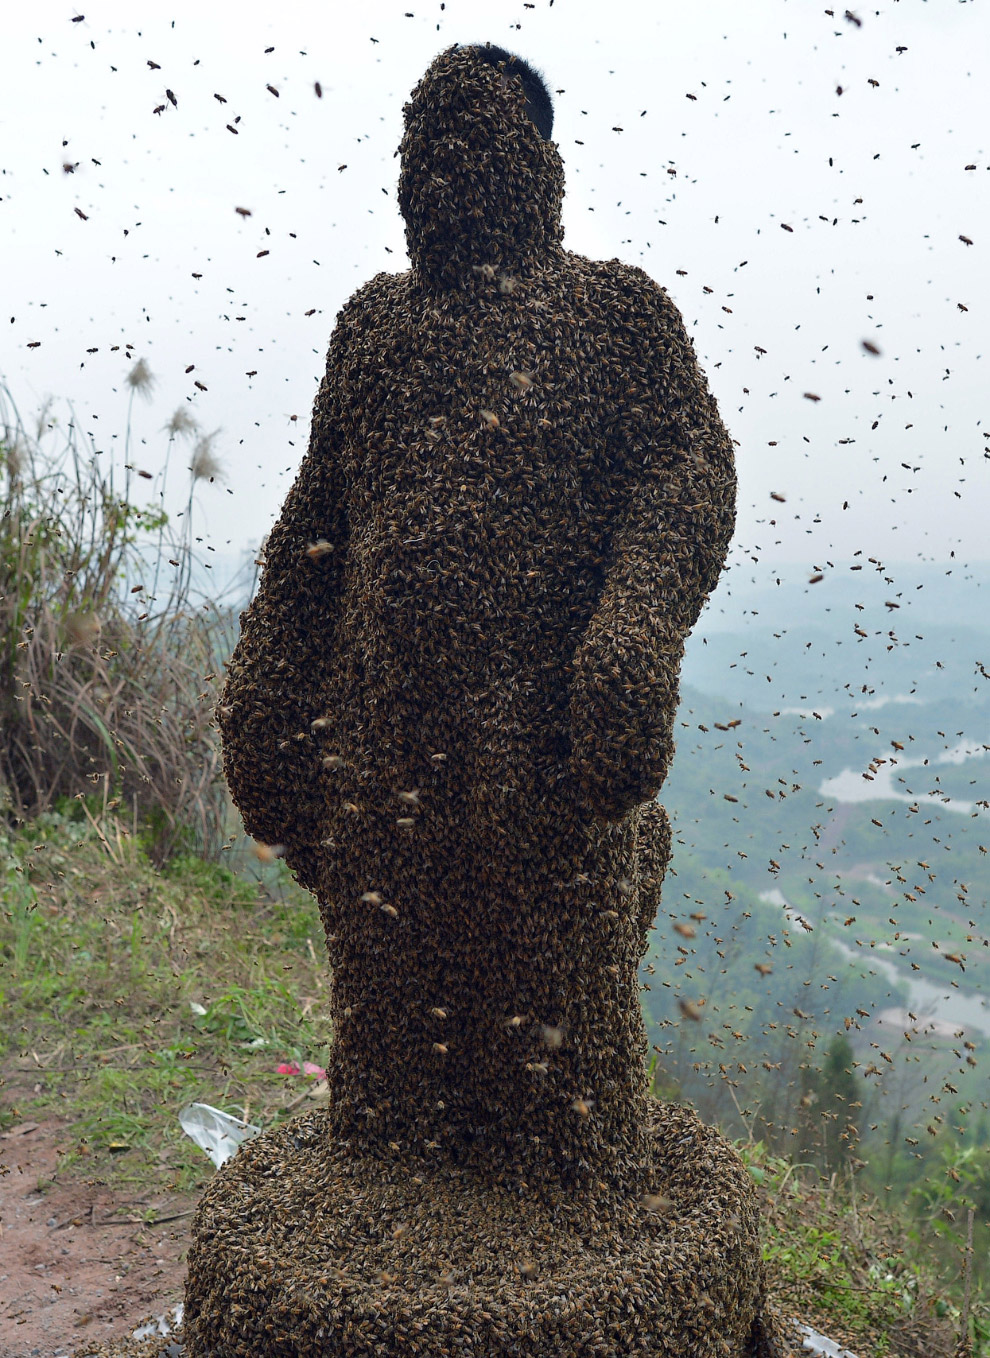 «Живой костюм» из пчел